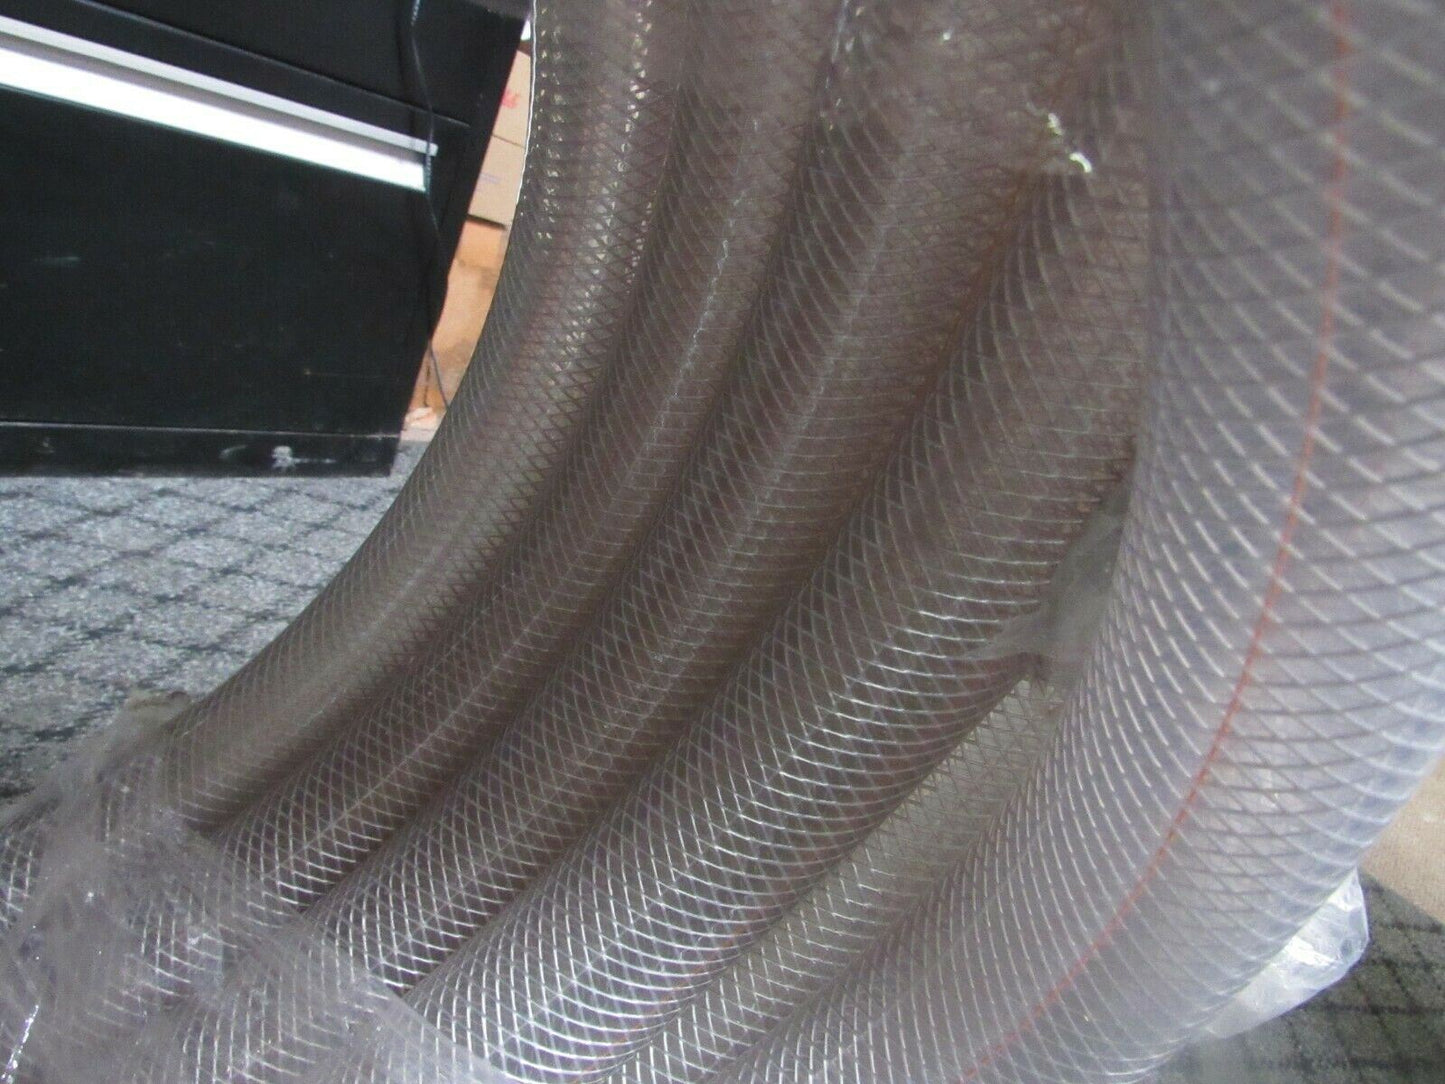 50' PVC Reinforced Tubing, SAE, 1-1/2" Inside Dia., 1-15/16" Outside Dia. (184308682530-BT09)